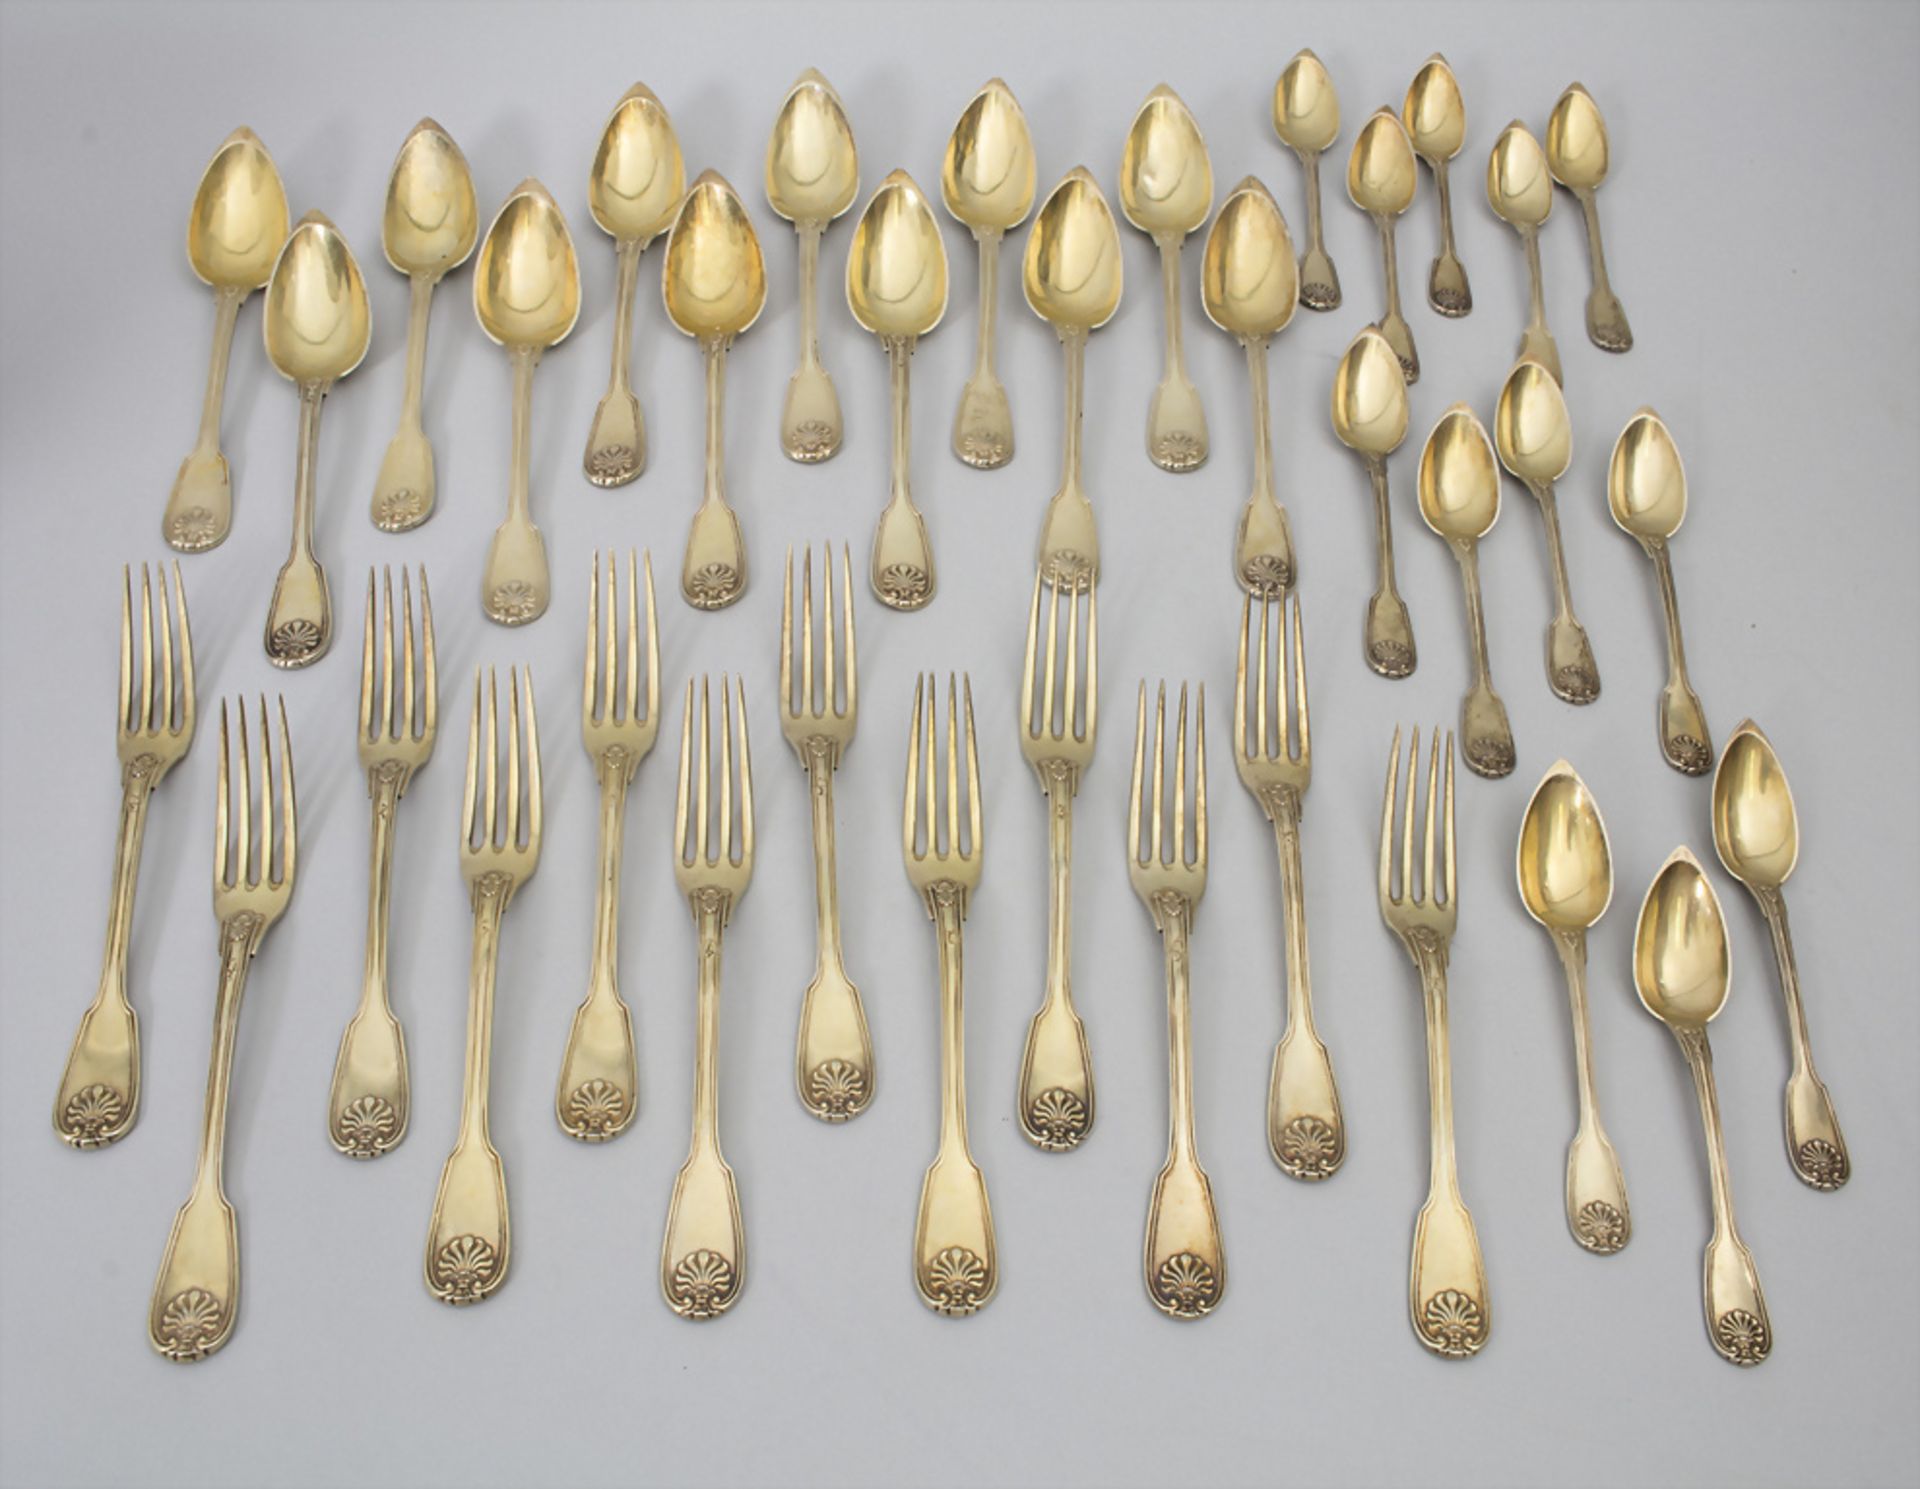 36 tlg. Silberbesteck / A 36-piece set of silver cutlery, Charles Salomon Mahler, Paris, 1824-1833